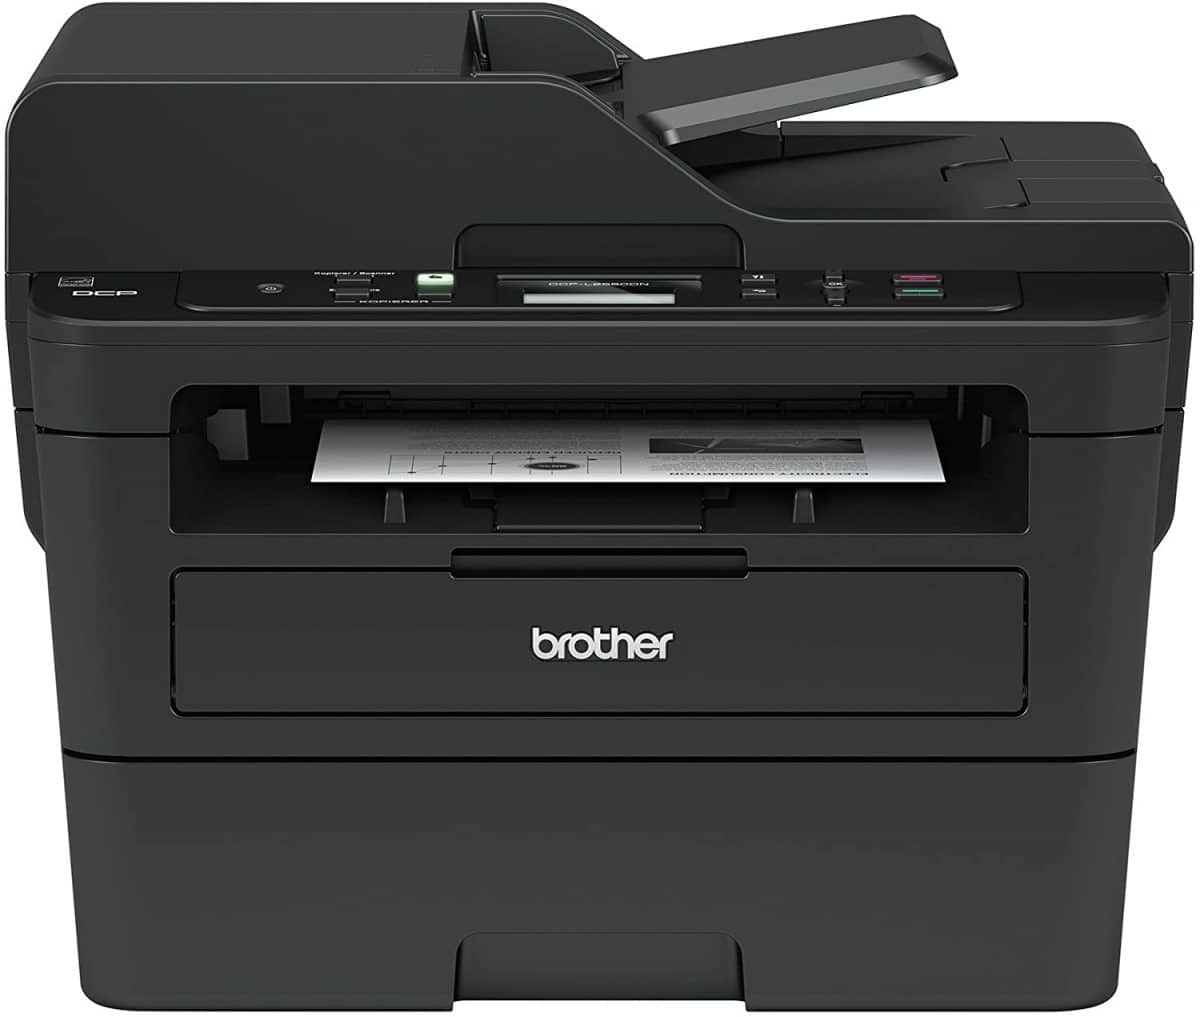 cheap basic printer